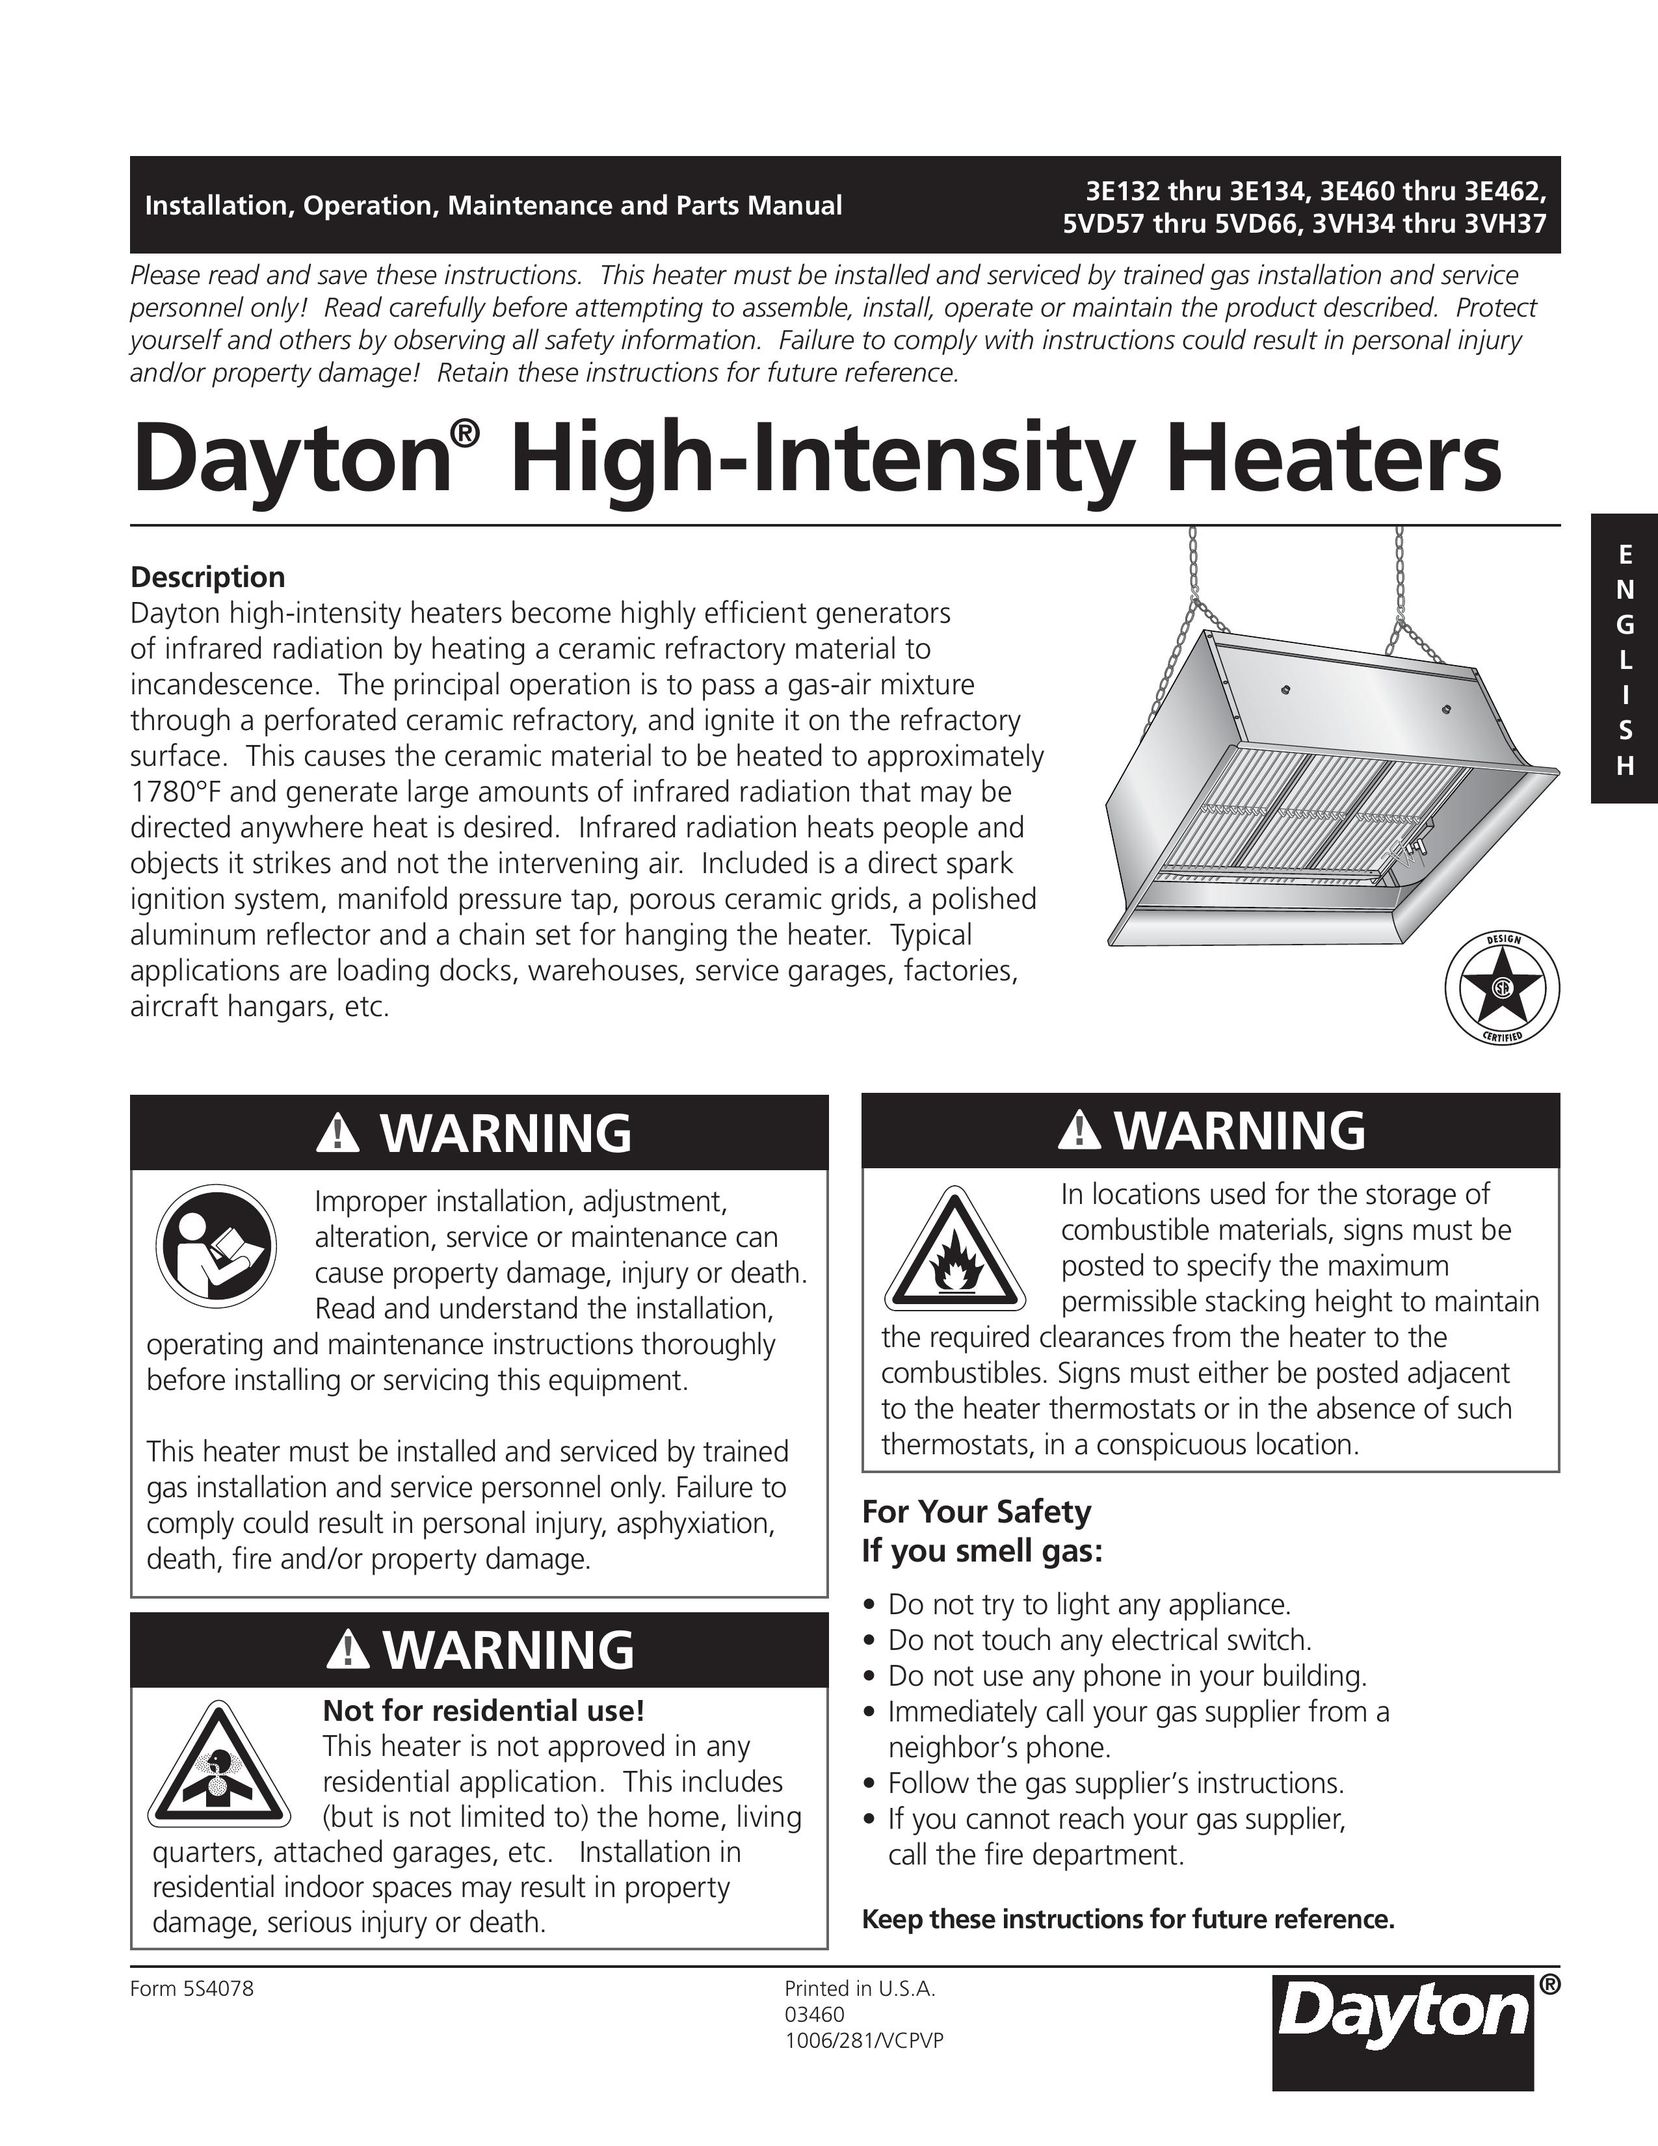 Dayton 3E462 Fan User Manual